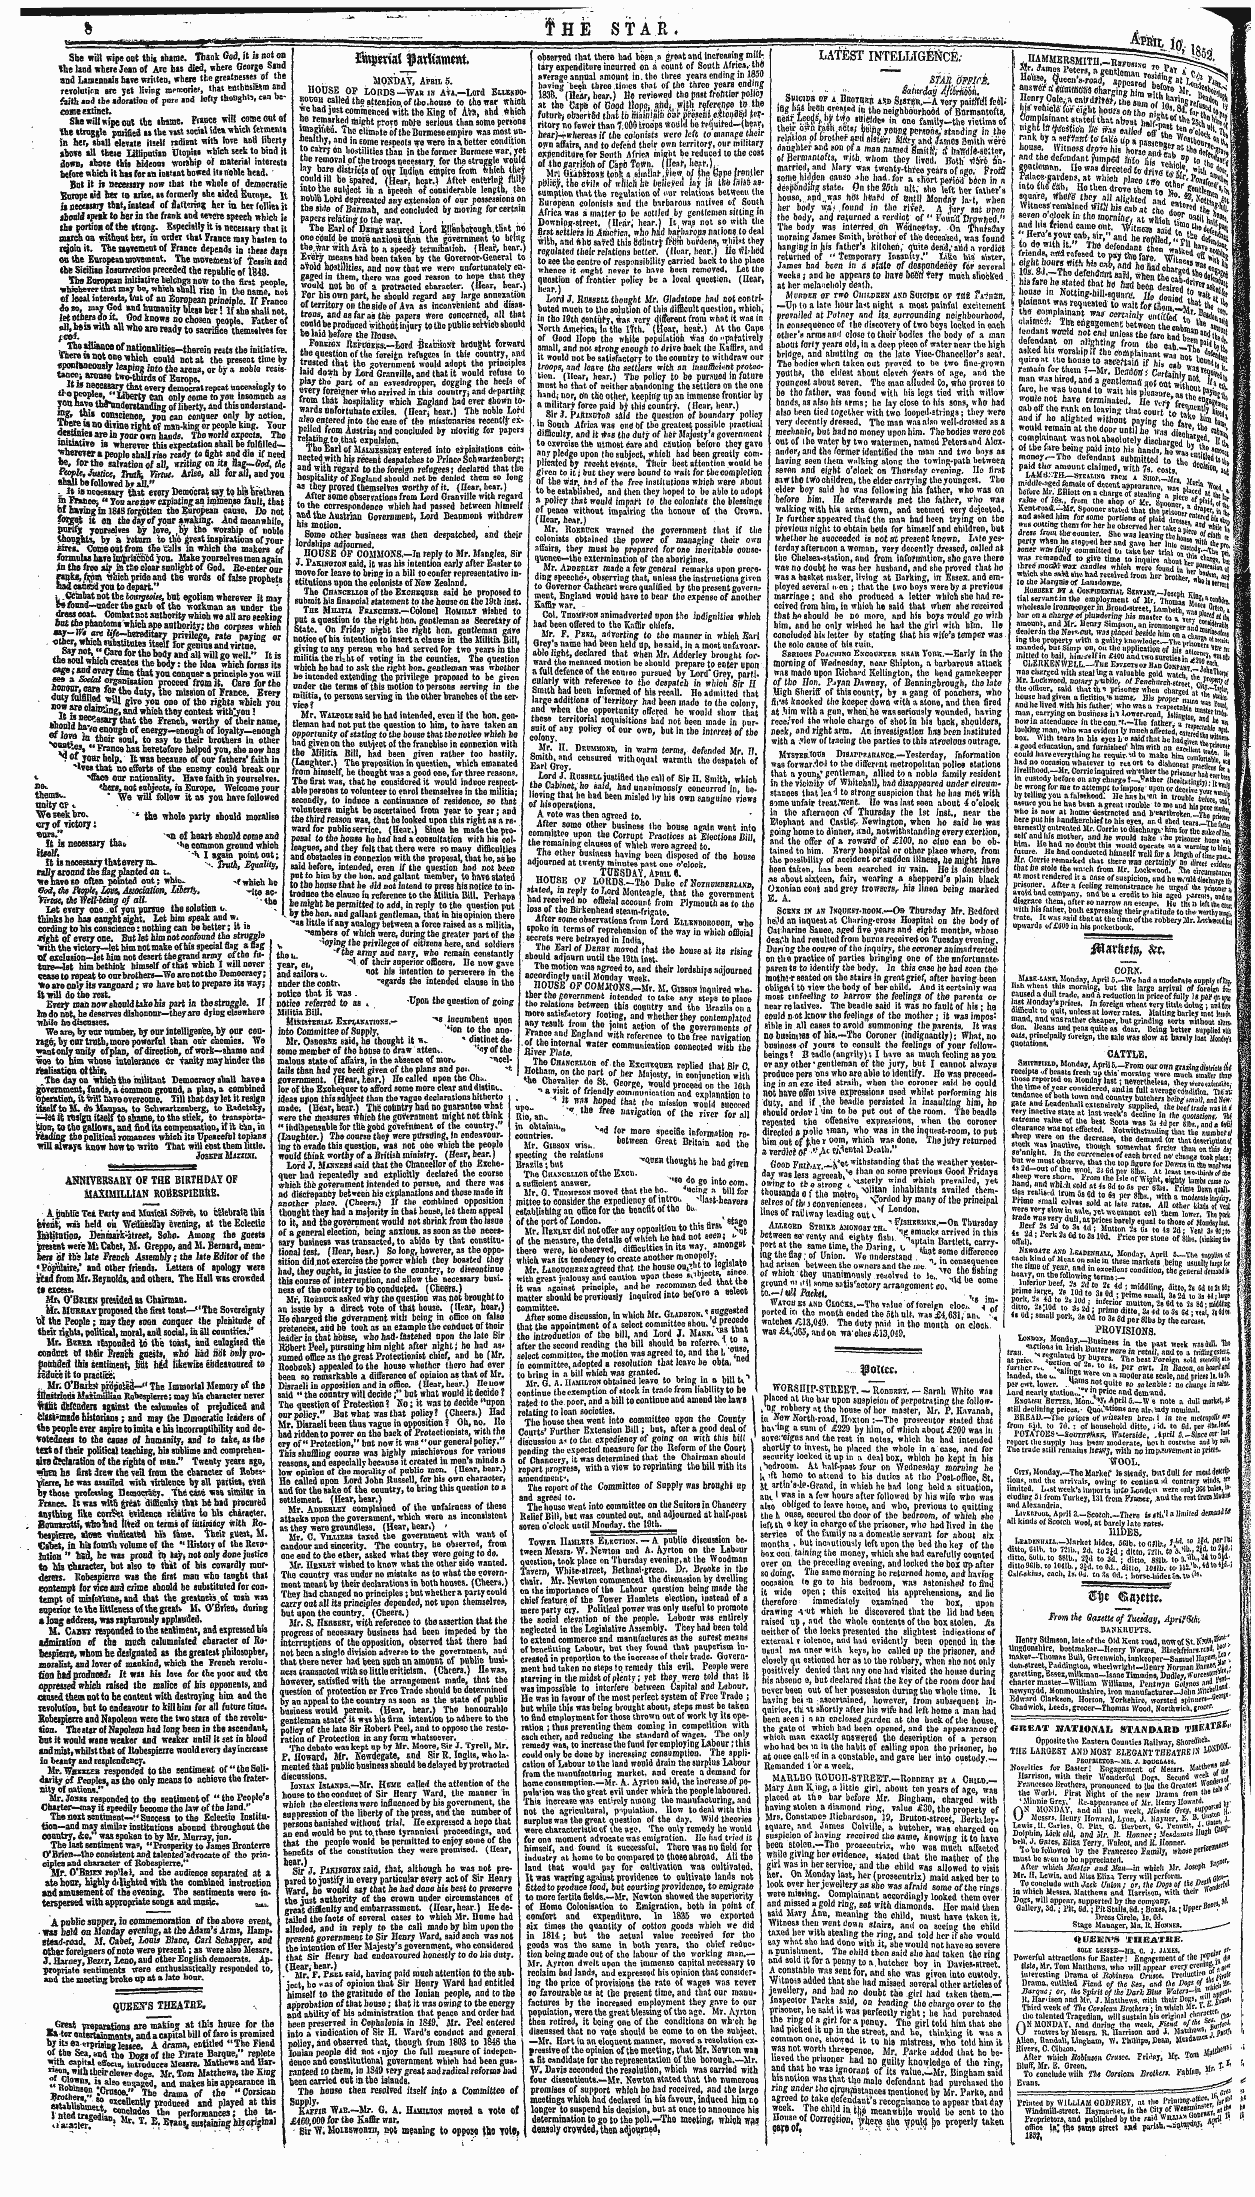 Northern Star (1837-1852): jS F Y, 2nd edition - Cork. Mabk-I.Ane, Monday, April 5.—We Ha...